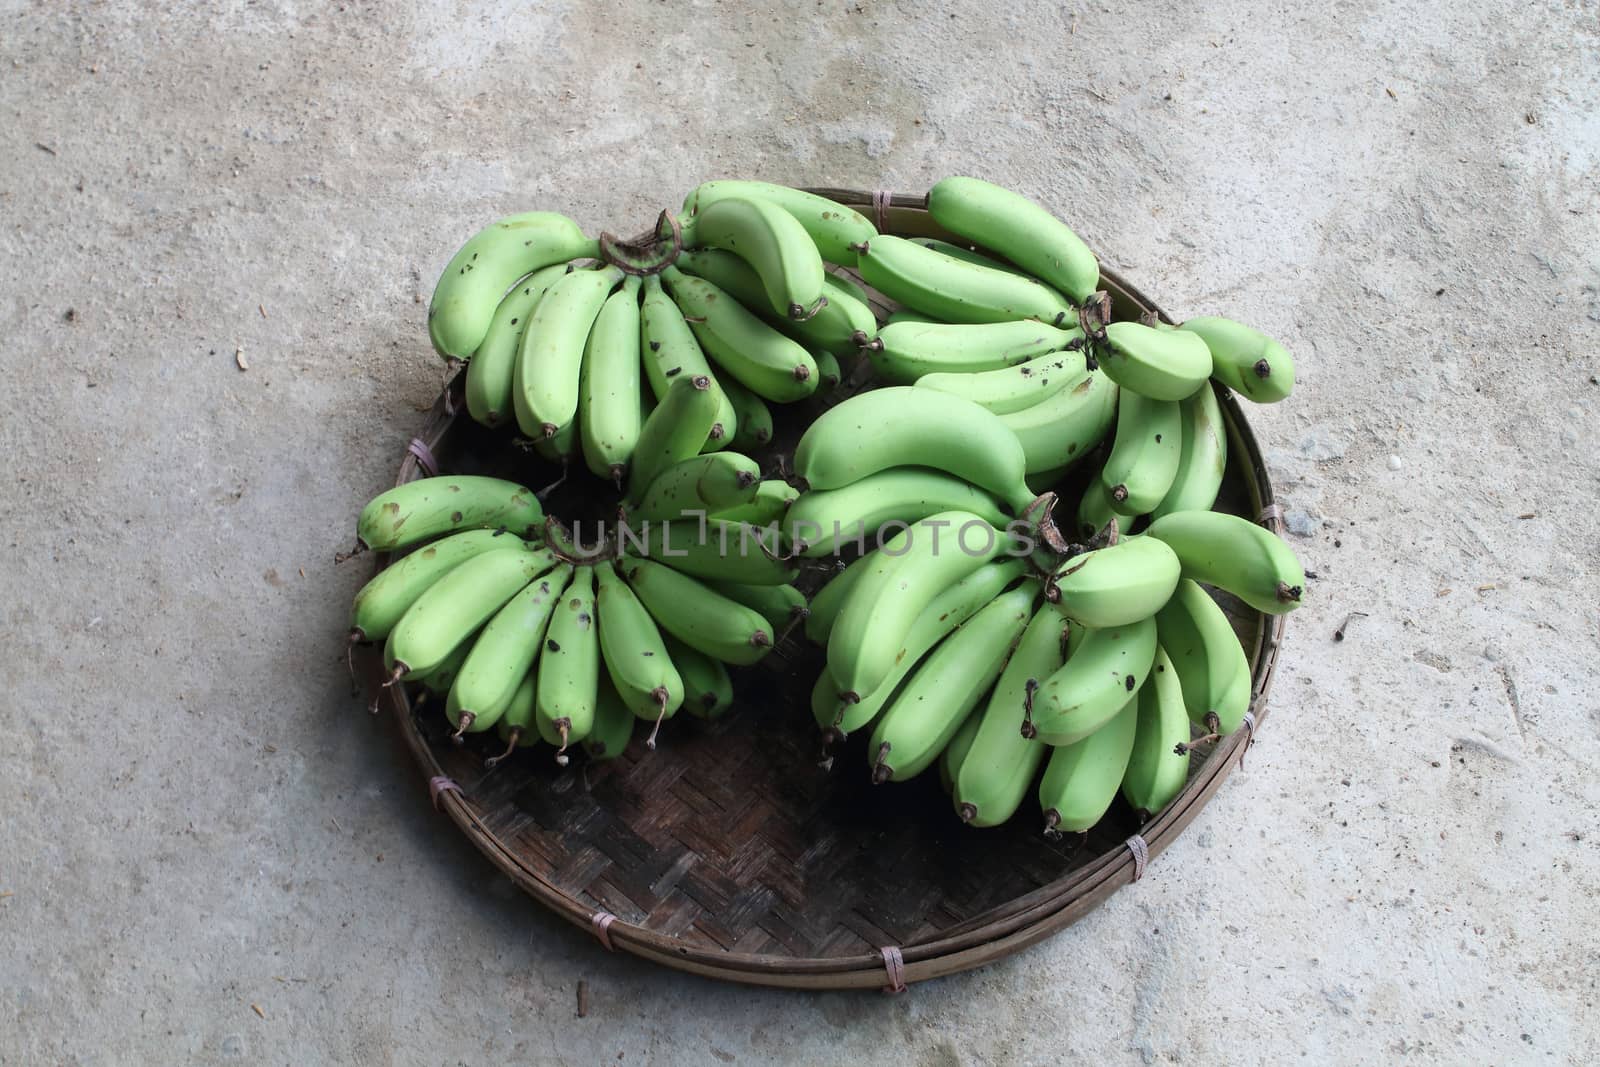 unripe banana in pannier by kaidevil